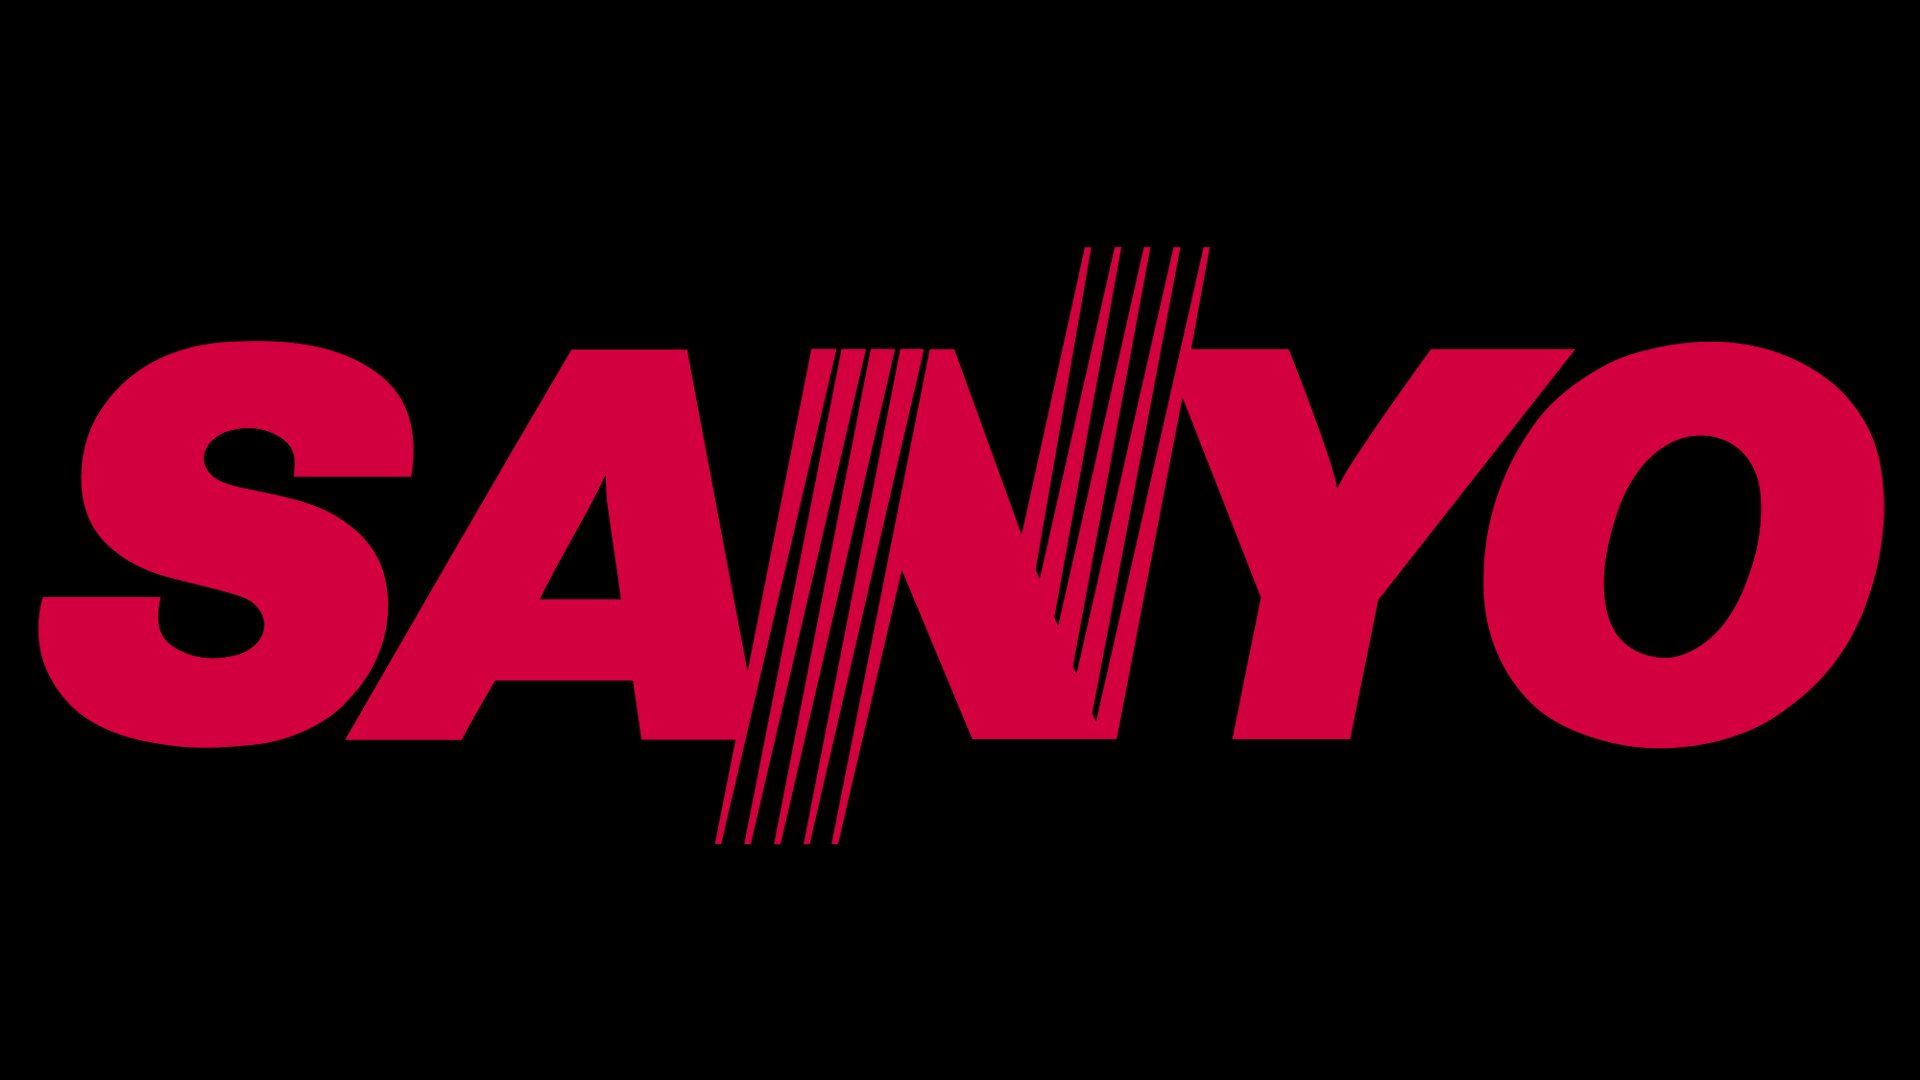 Sanyo Logo And Symbol Meaning History Png